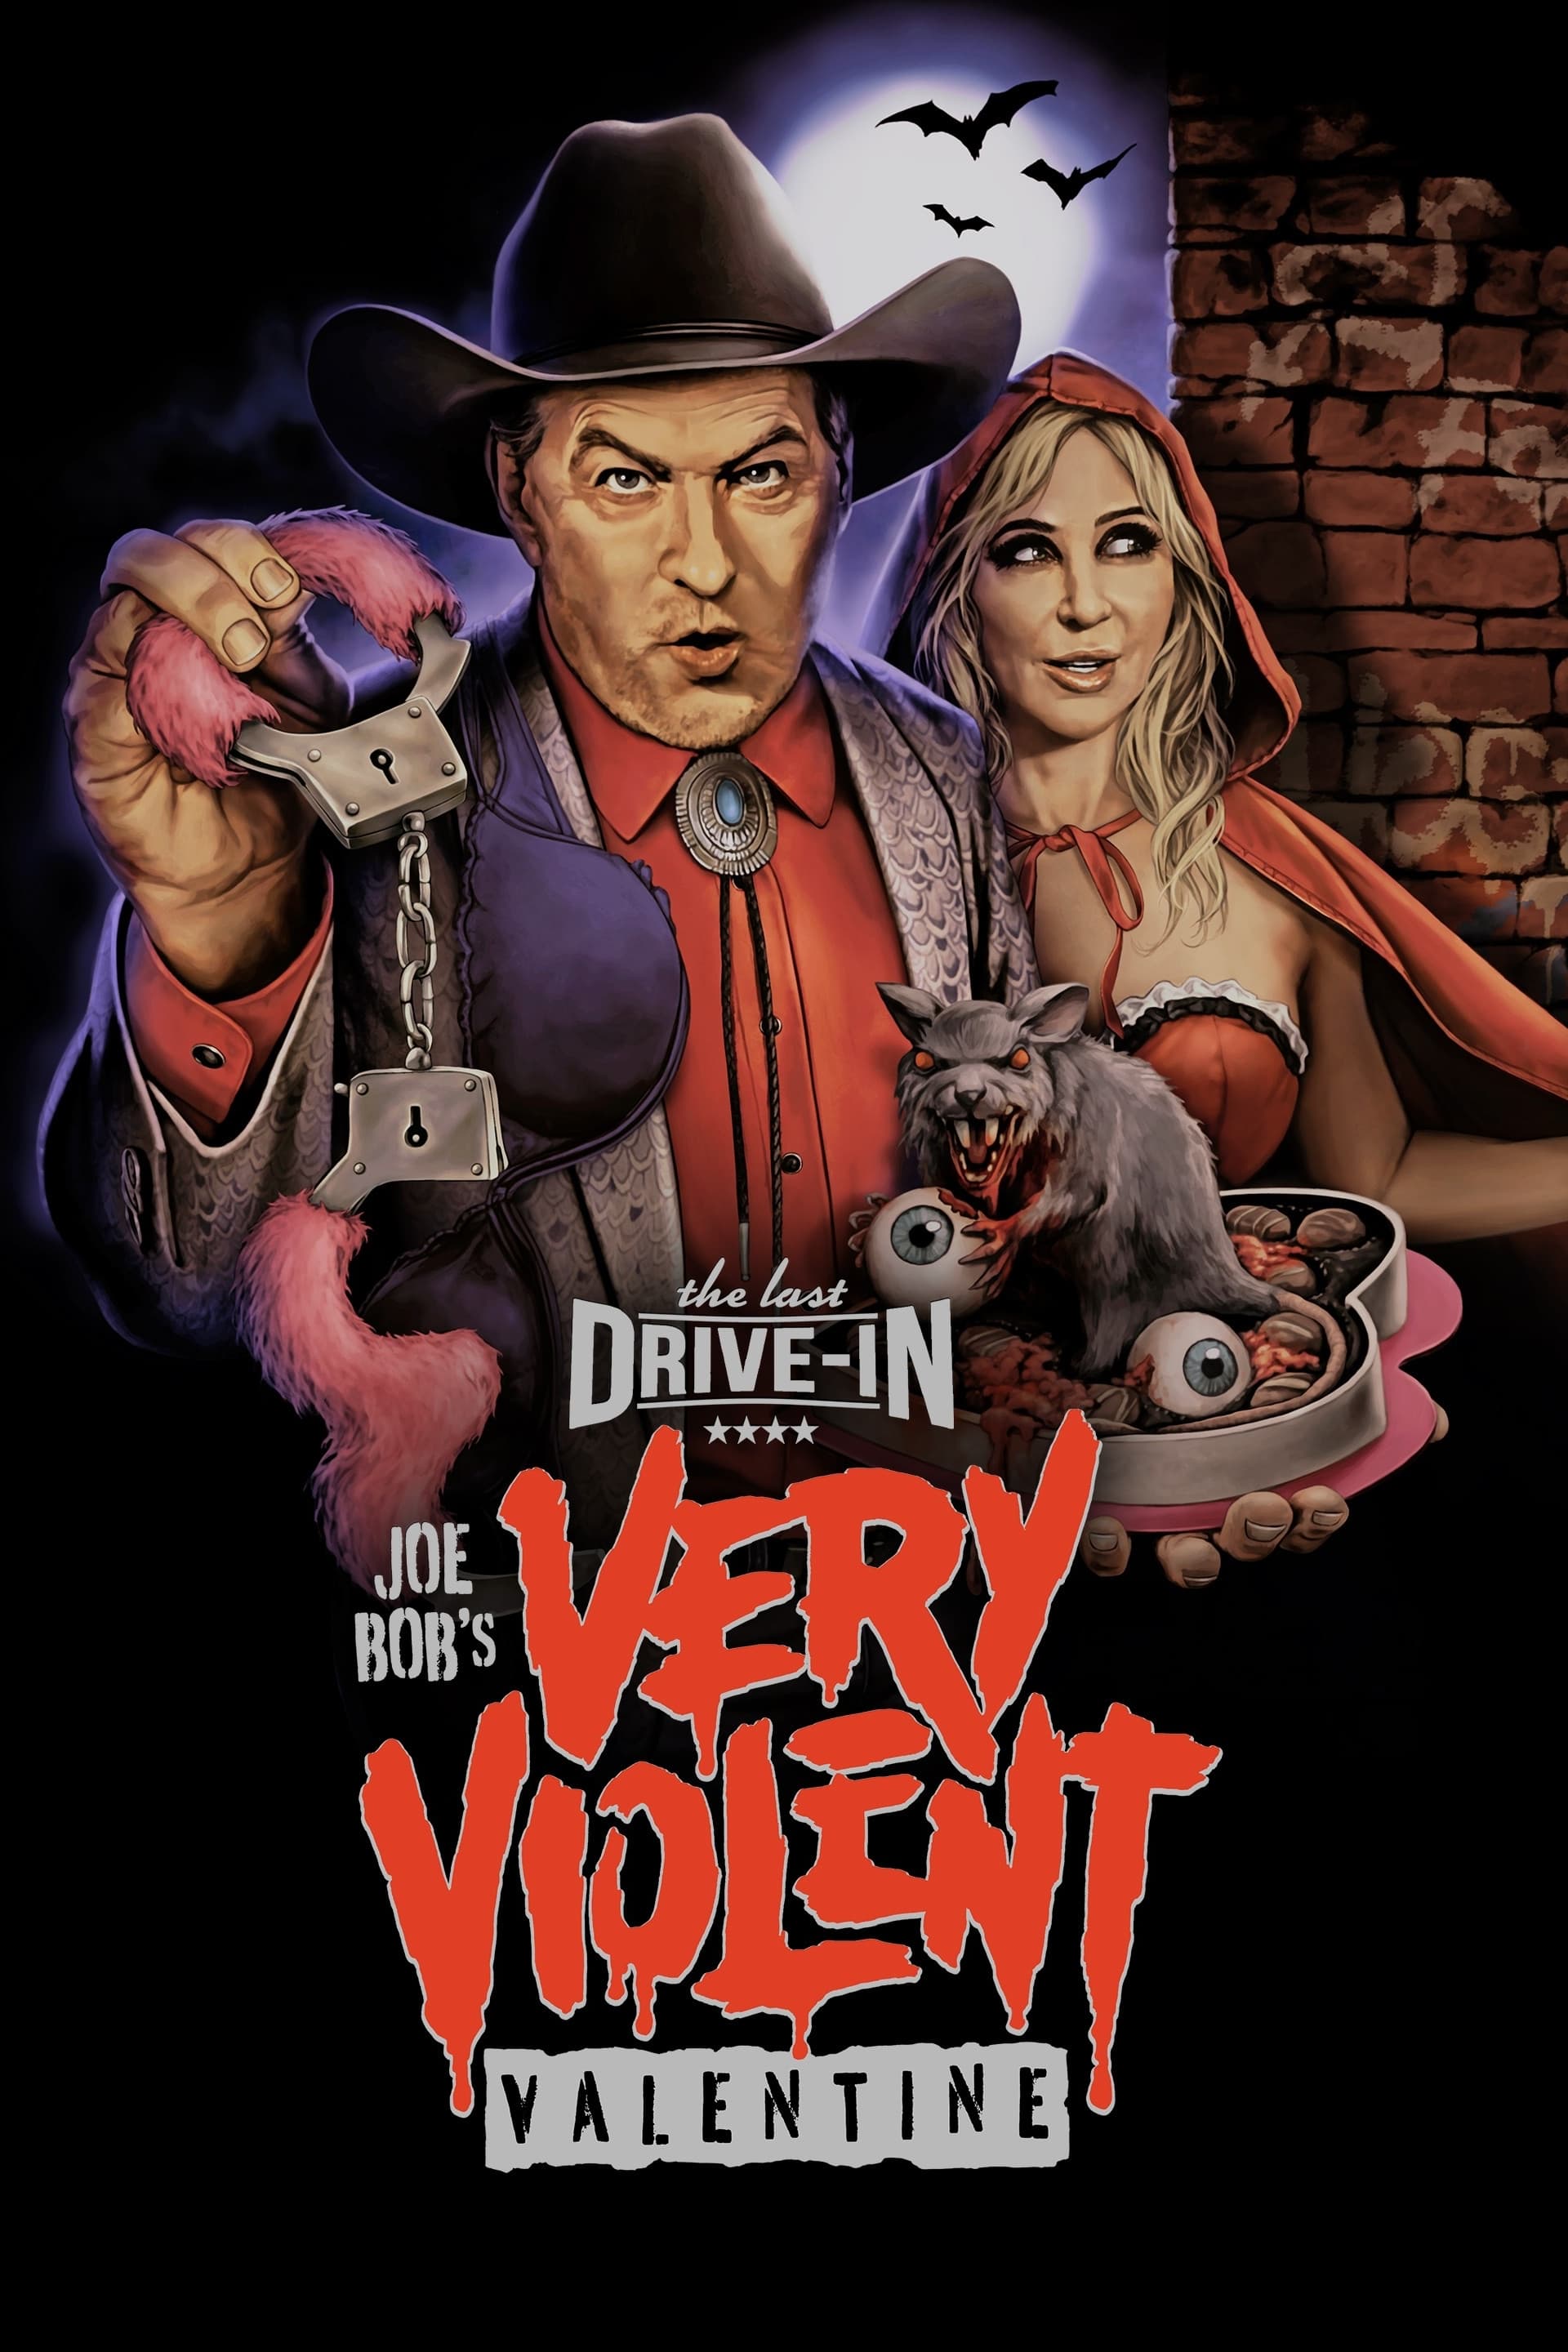 The Last Drive-In: Joe Bob's Very Violent Valentine